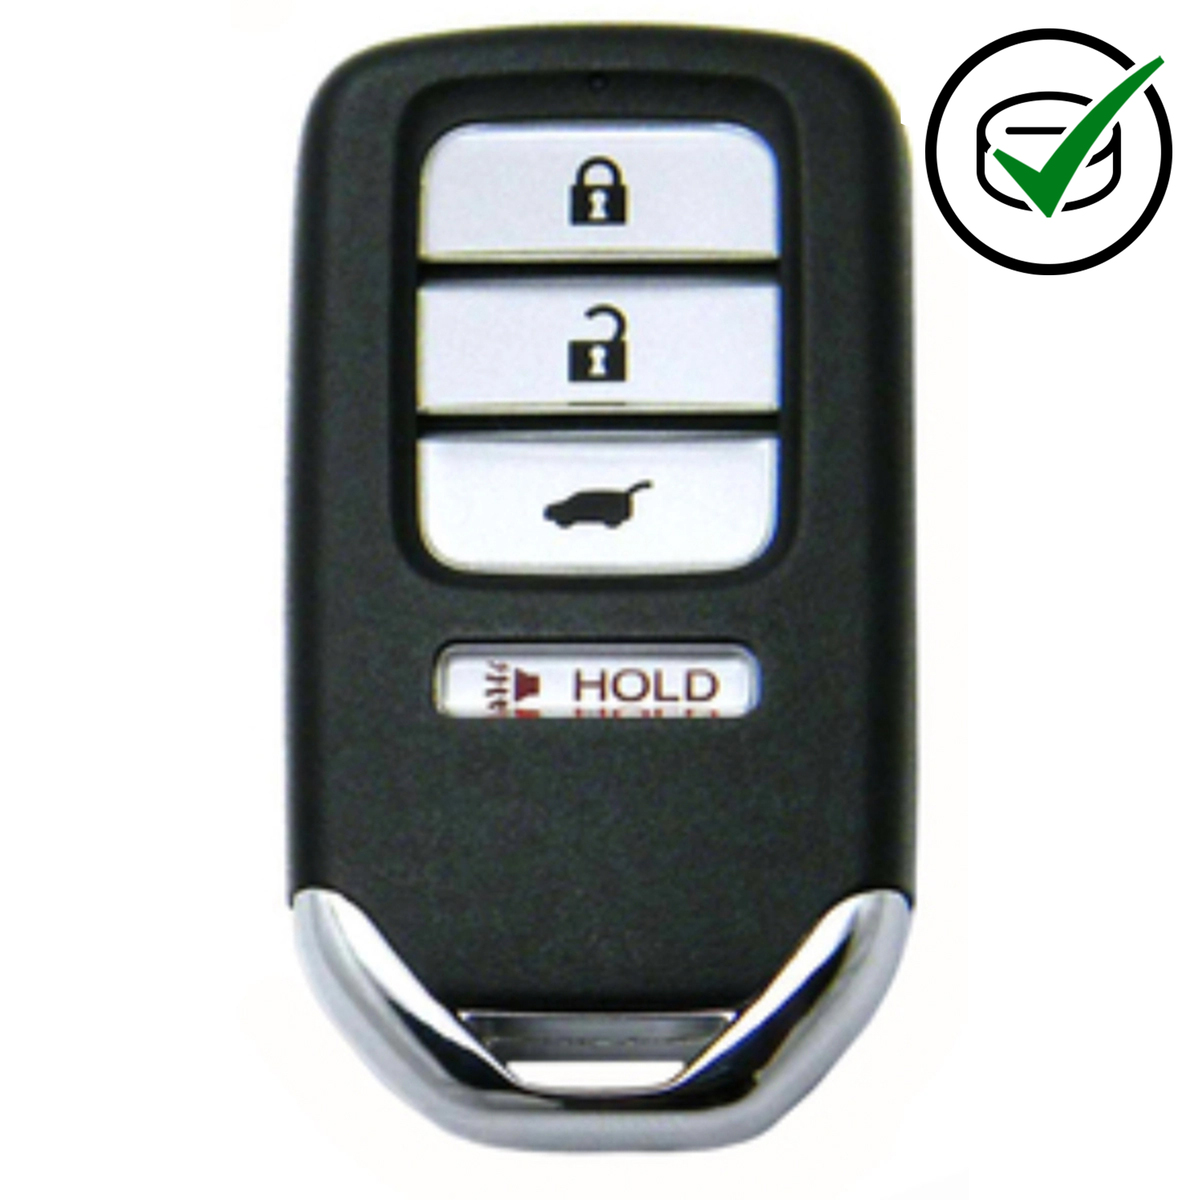 Autel KM100, 4 button Honda Style Universal Smart remote